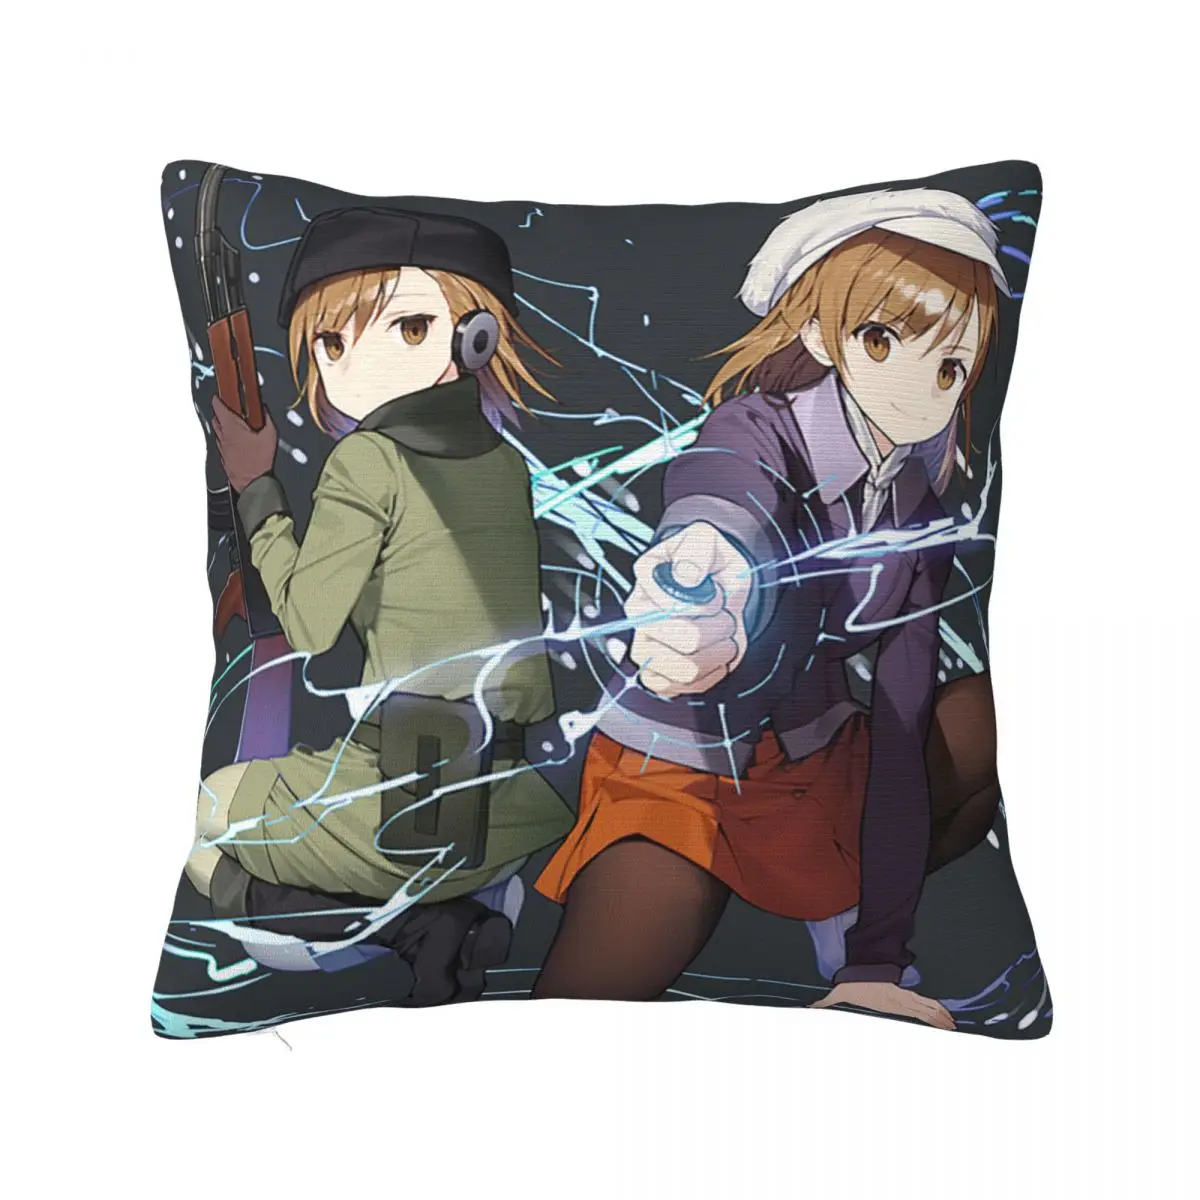 

Misaka Mikoto Pillowcase Soft Polyester Cushion Cover Gift Anime Toaru Kagaku no Railgun Pillow Case Cover Home Square 45*45cm